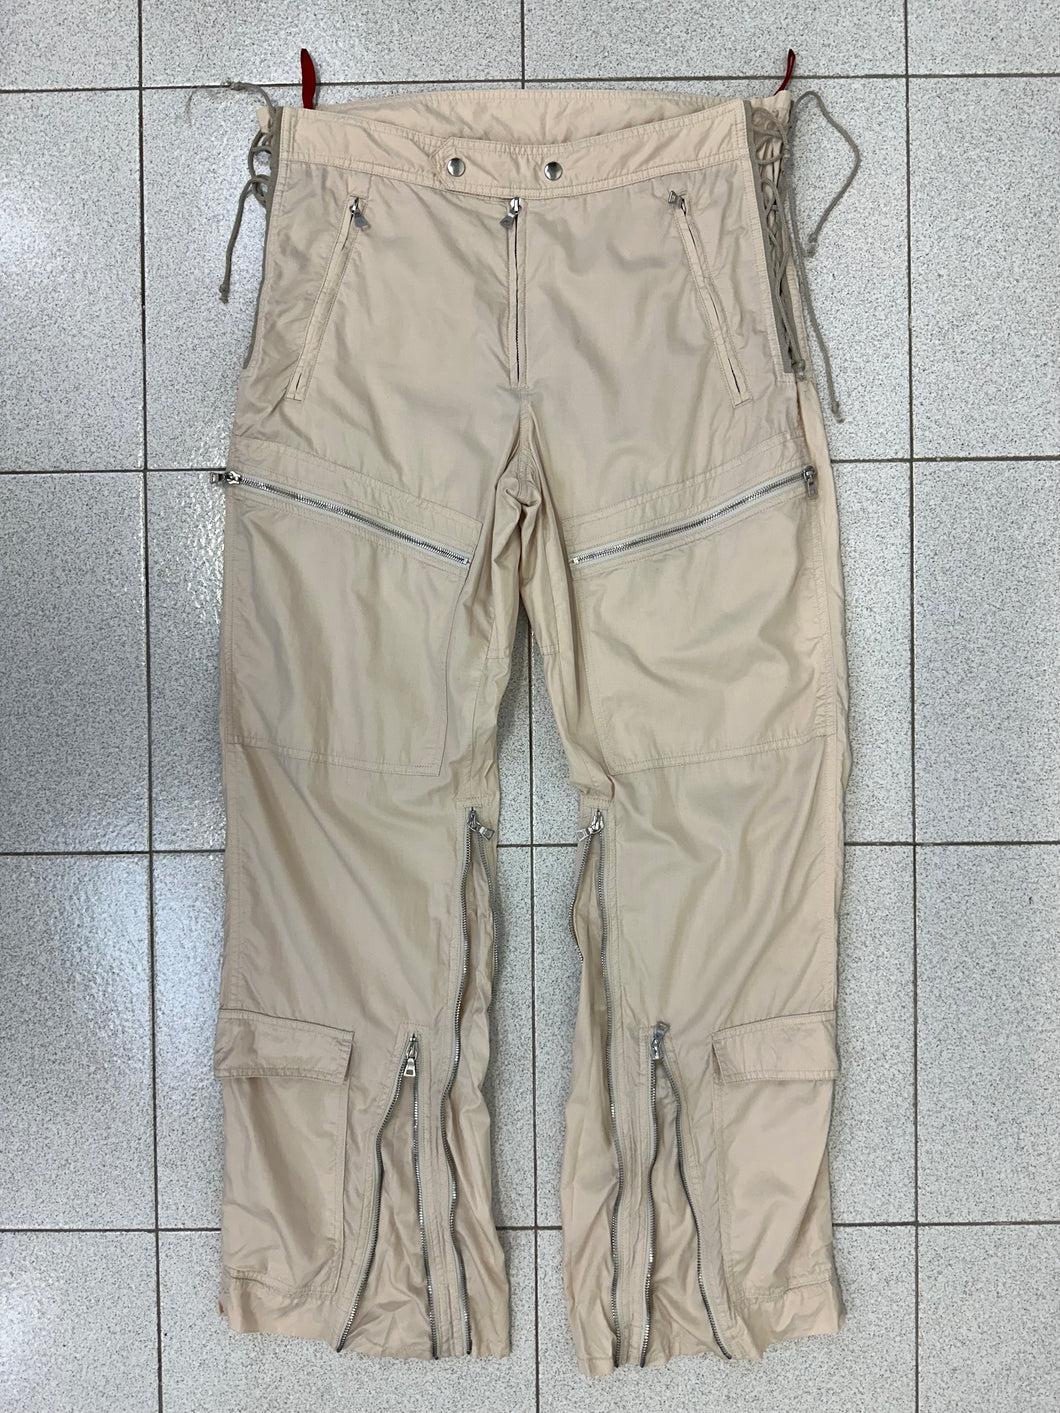 AW1999 Prada zipper laced astro biker cargo pants